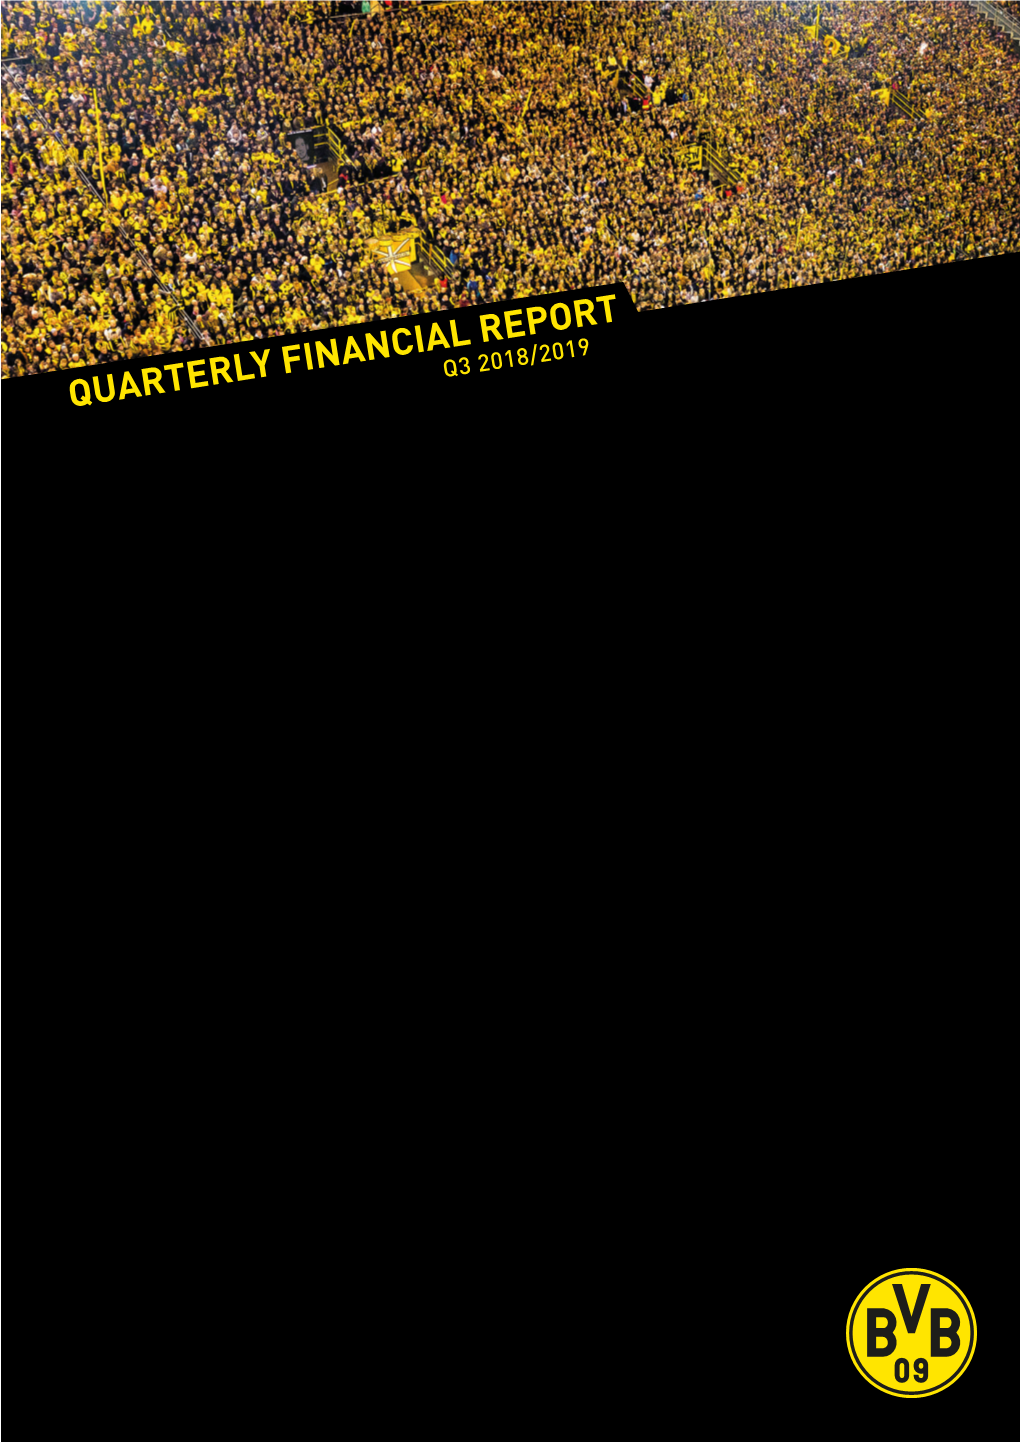 Bvb Quarterly Financial Report Q3 2018/2019